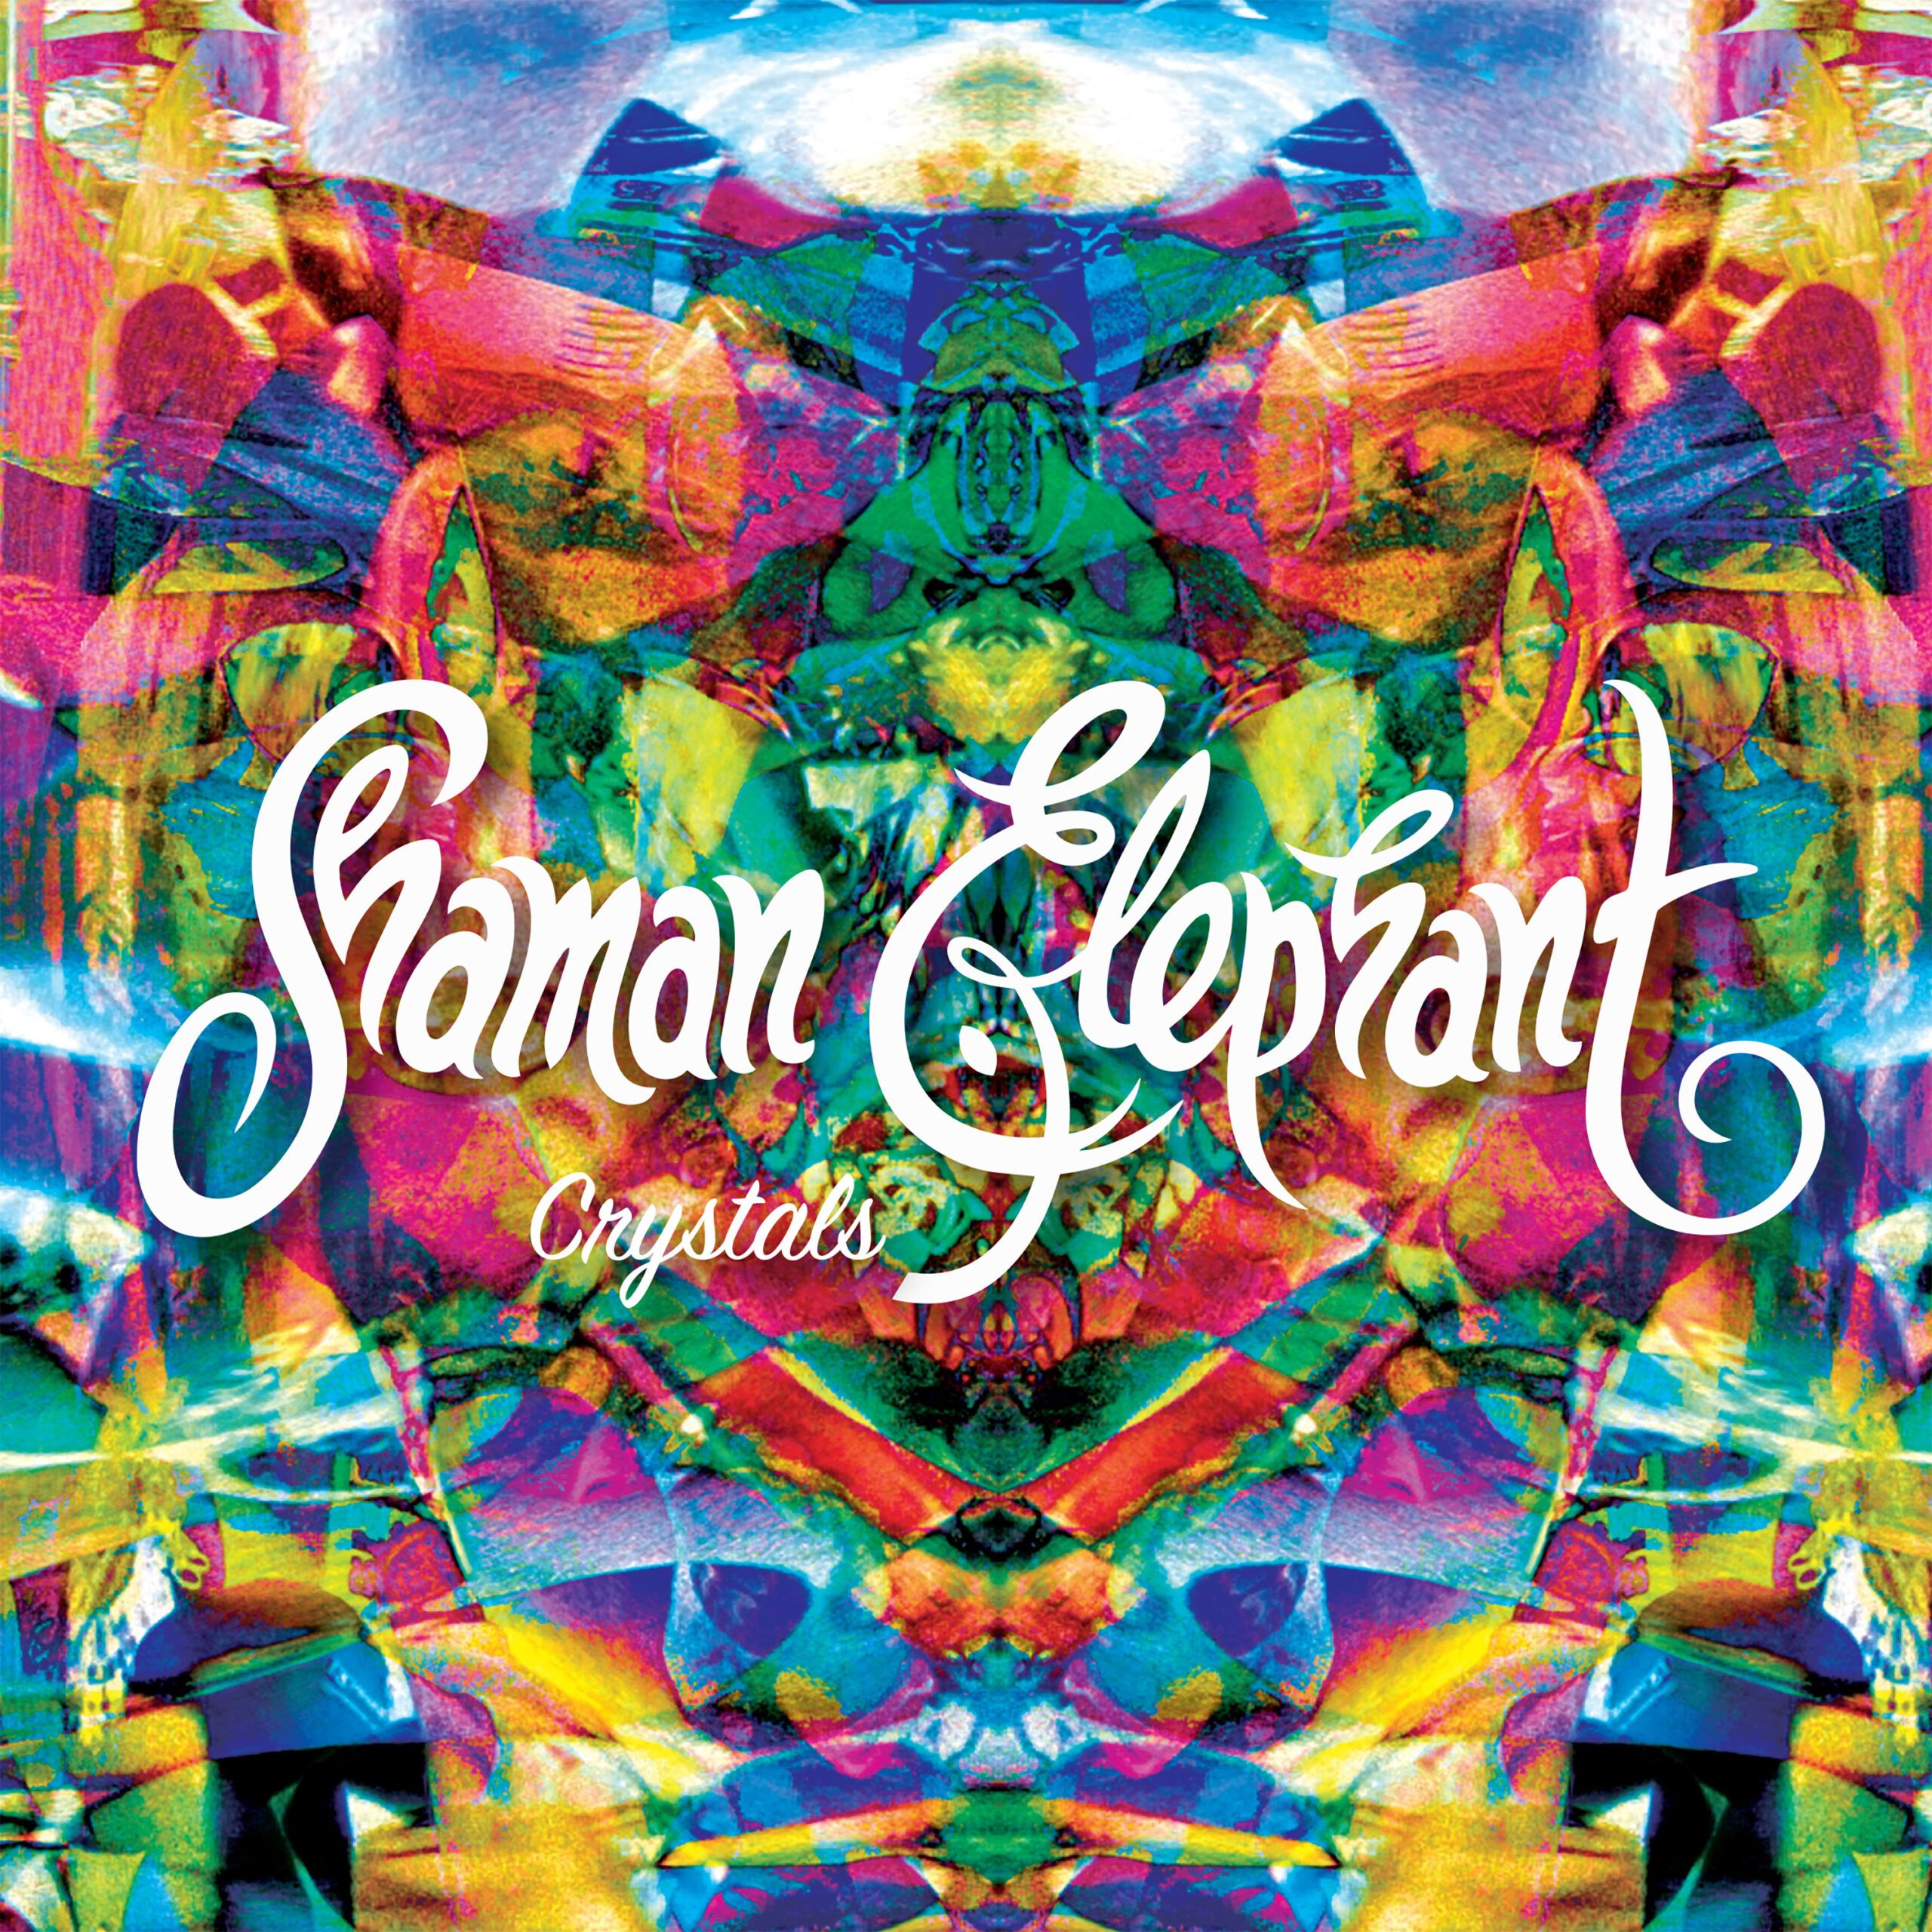 Shaman Elephant feiern 'Crystals'-Songpremiere